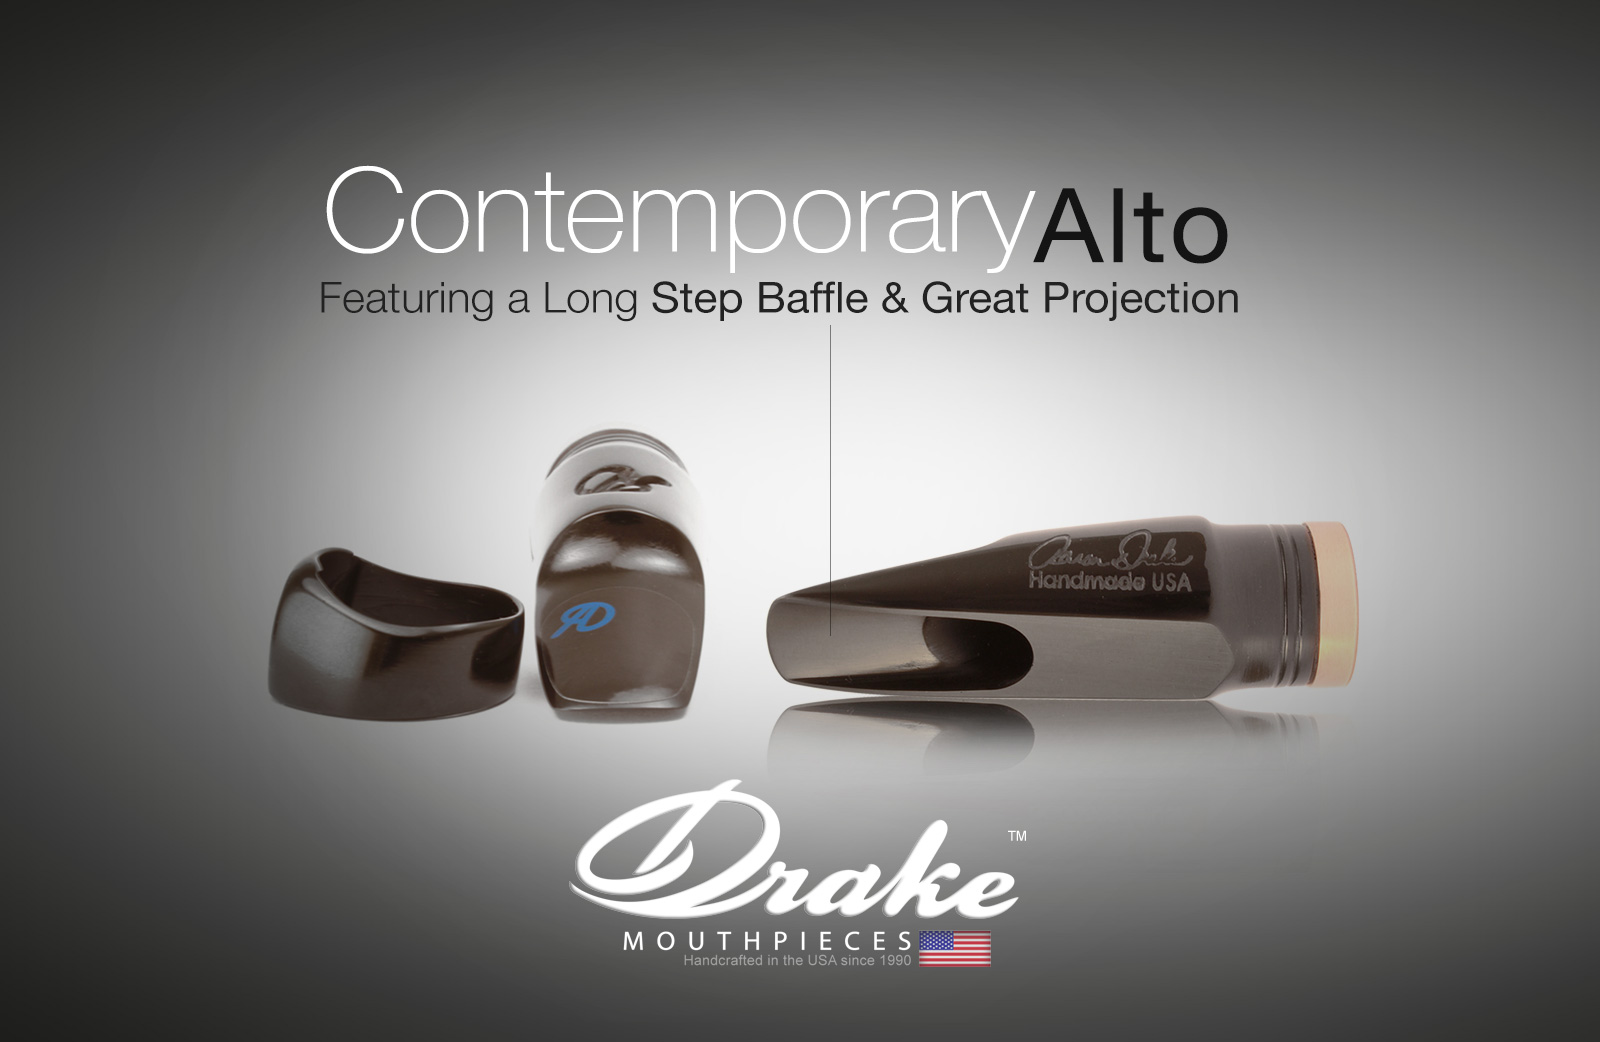 Drake Saxophone Mouthpieces Contemporary Alto model layout